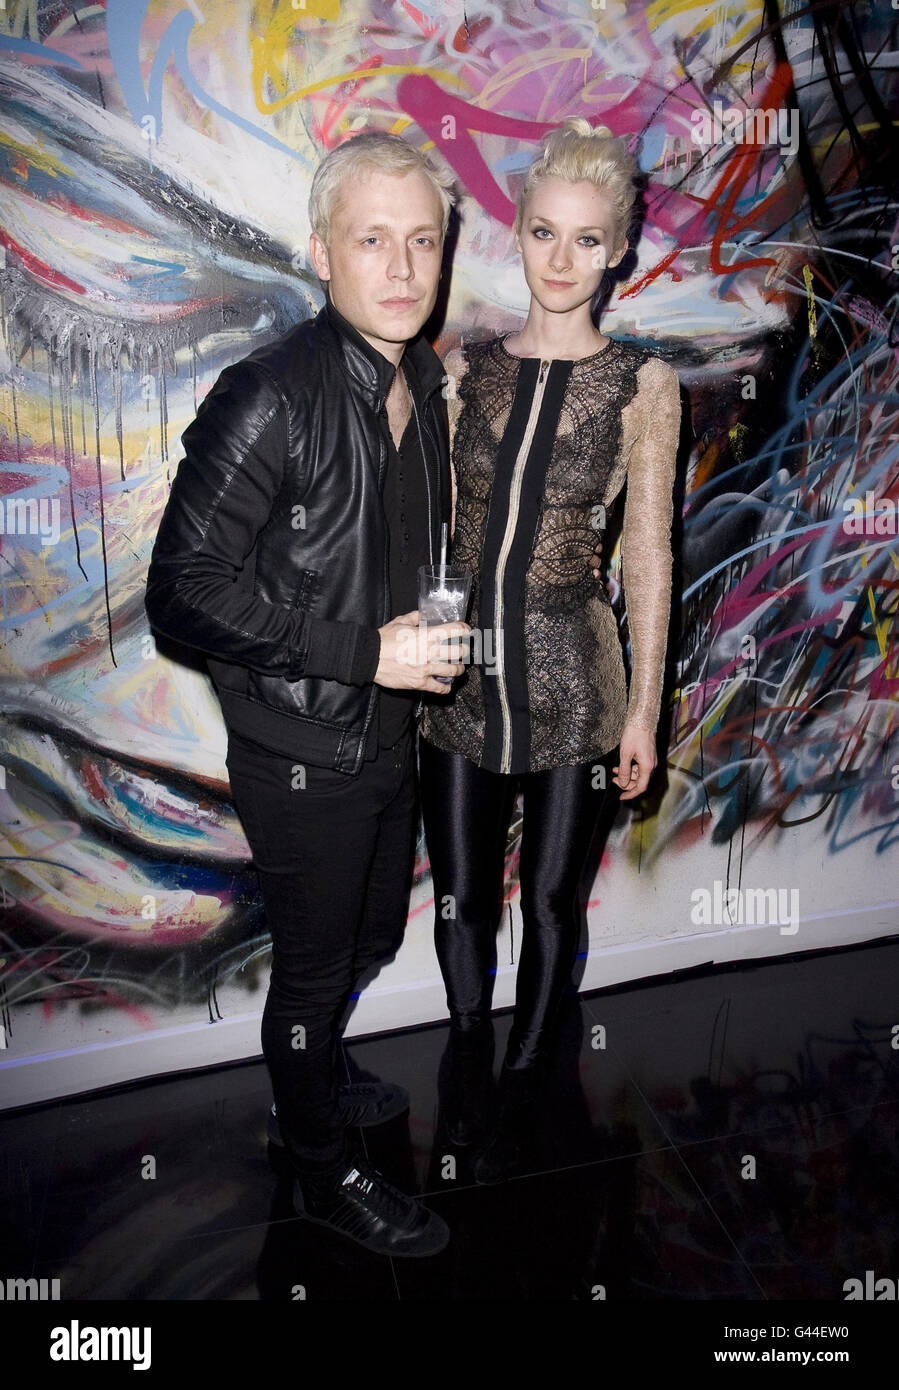 Mr Hudson (links) und Portia Freeman nehmen an der Sony Music & Next Model Management London Fashion Week Closing Party, Exile, Millbank Tower, Millbank London Teil. Stockfoto